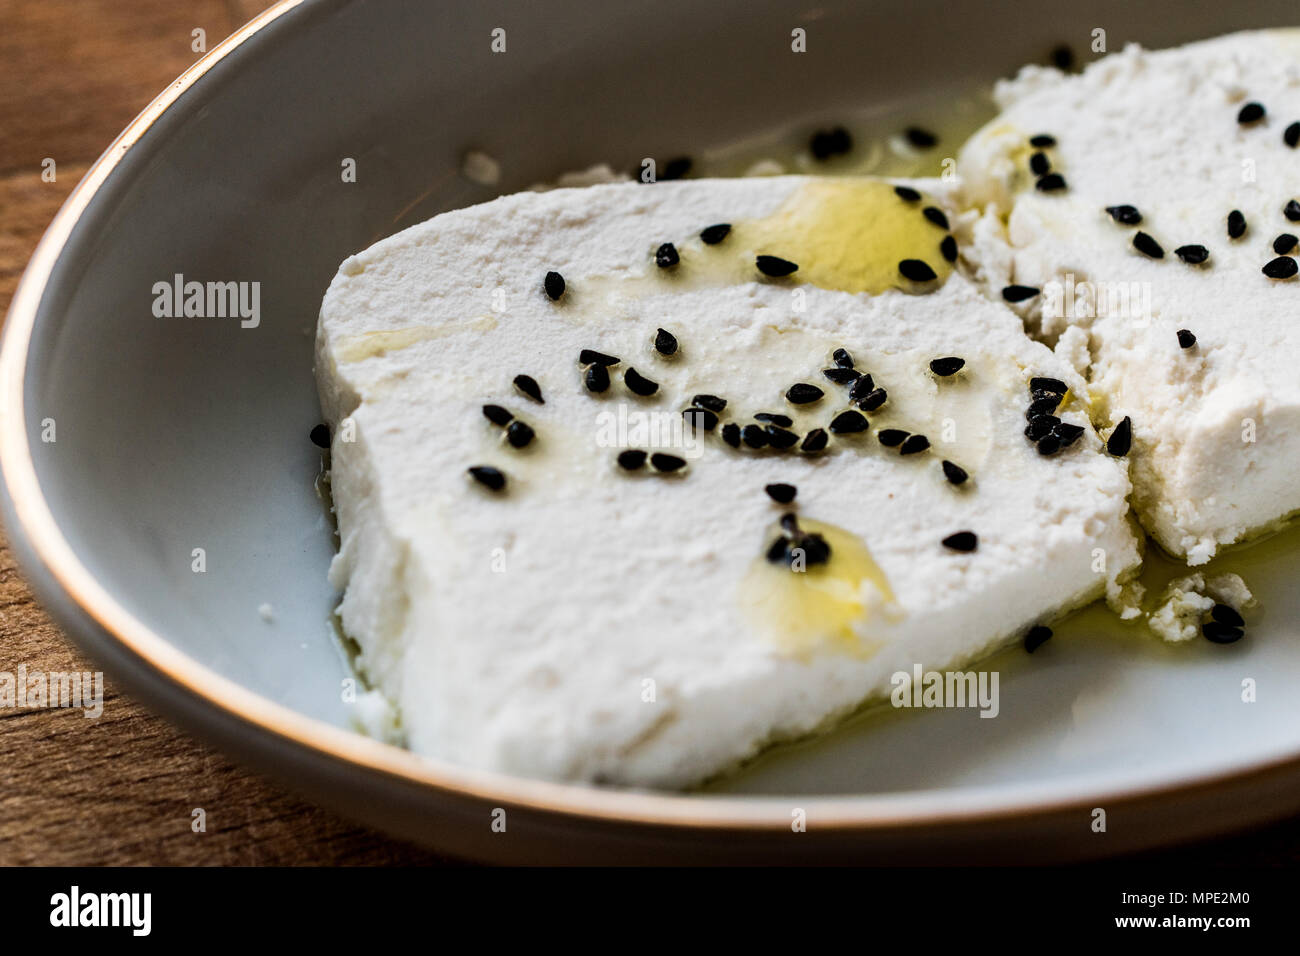 Cokelek or lor peyniri / Curd Cheese with olive oil and black cumin. Organic Food. Stock Photo